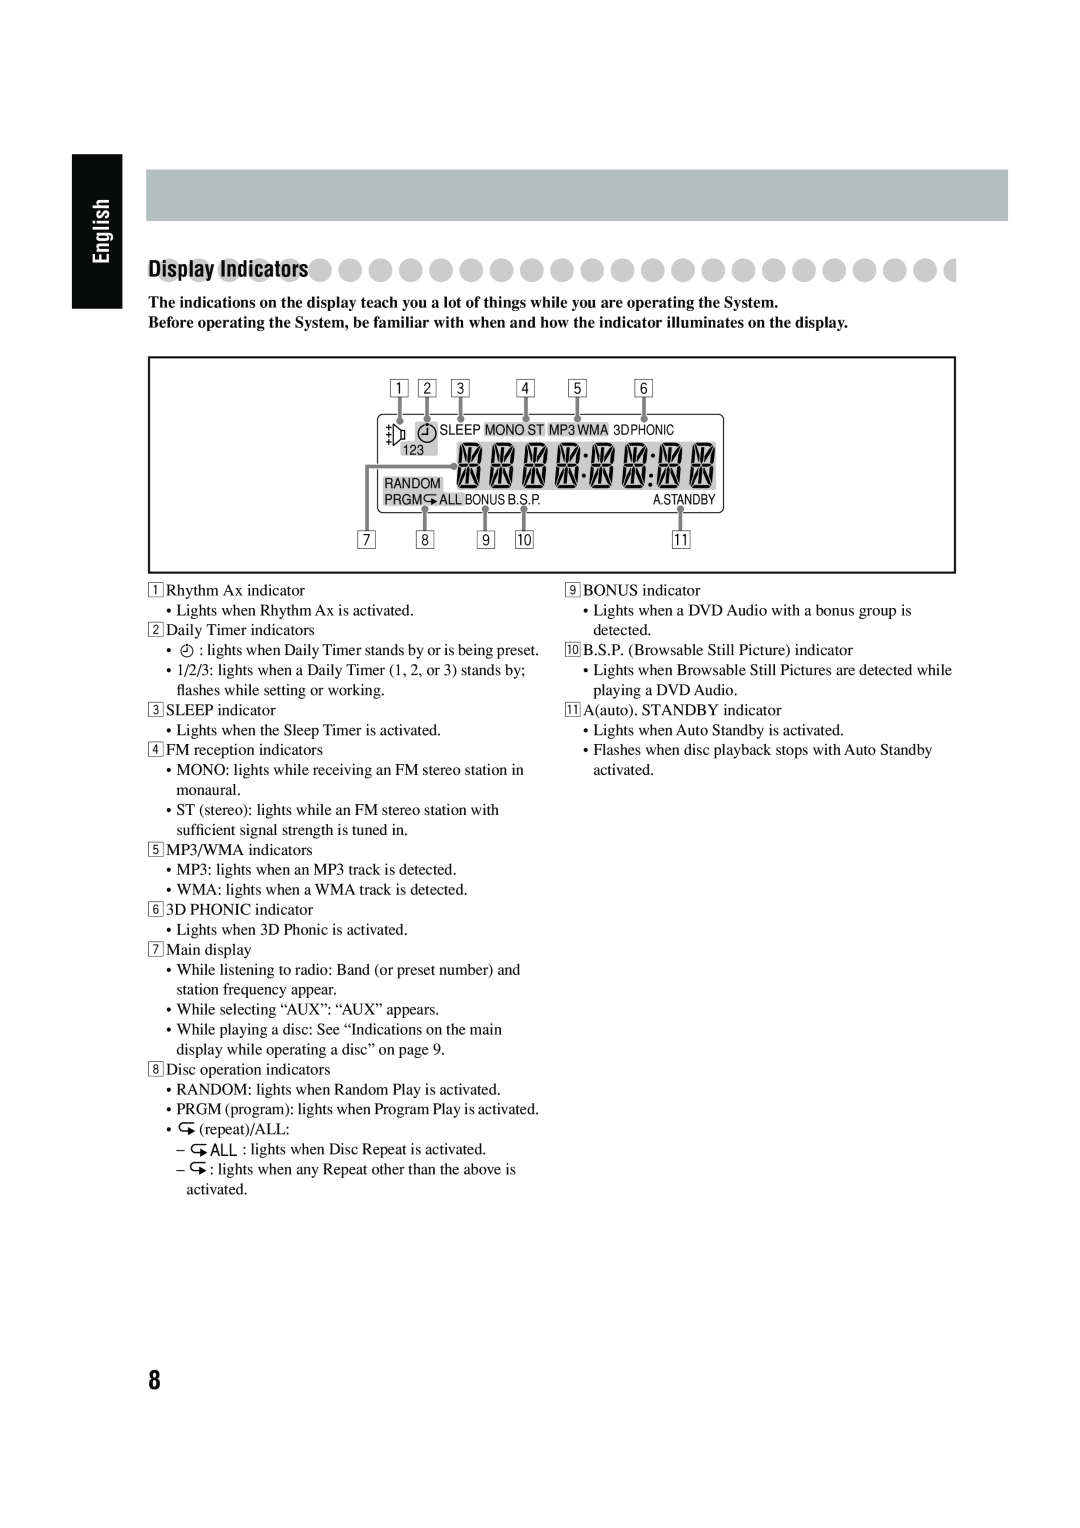 JVC FS-P550 manual DisplayIndicators, English, 7 8 9 p 